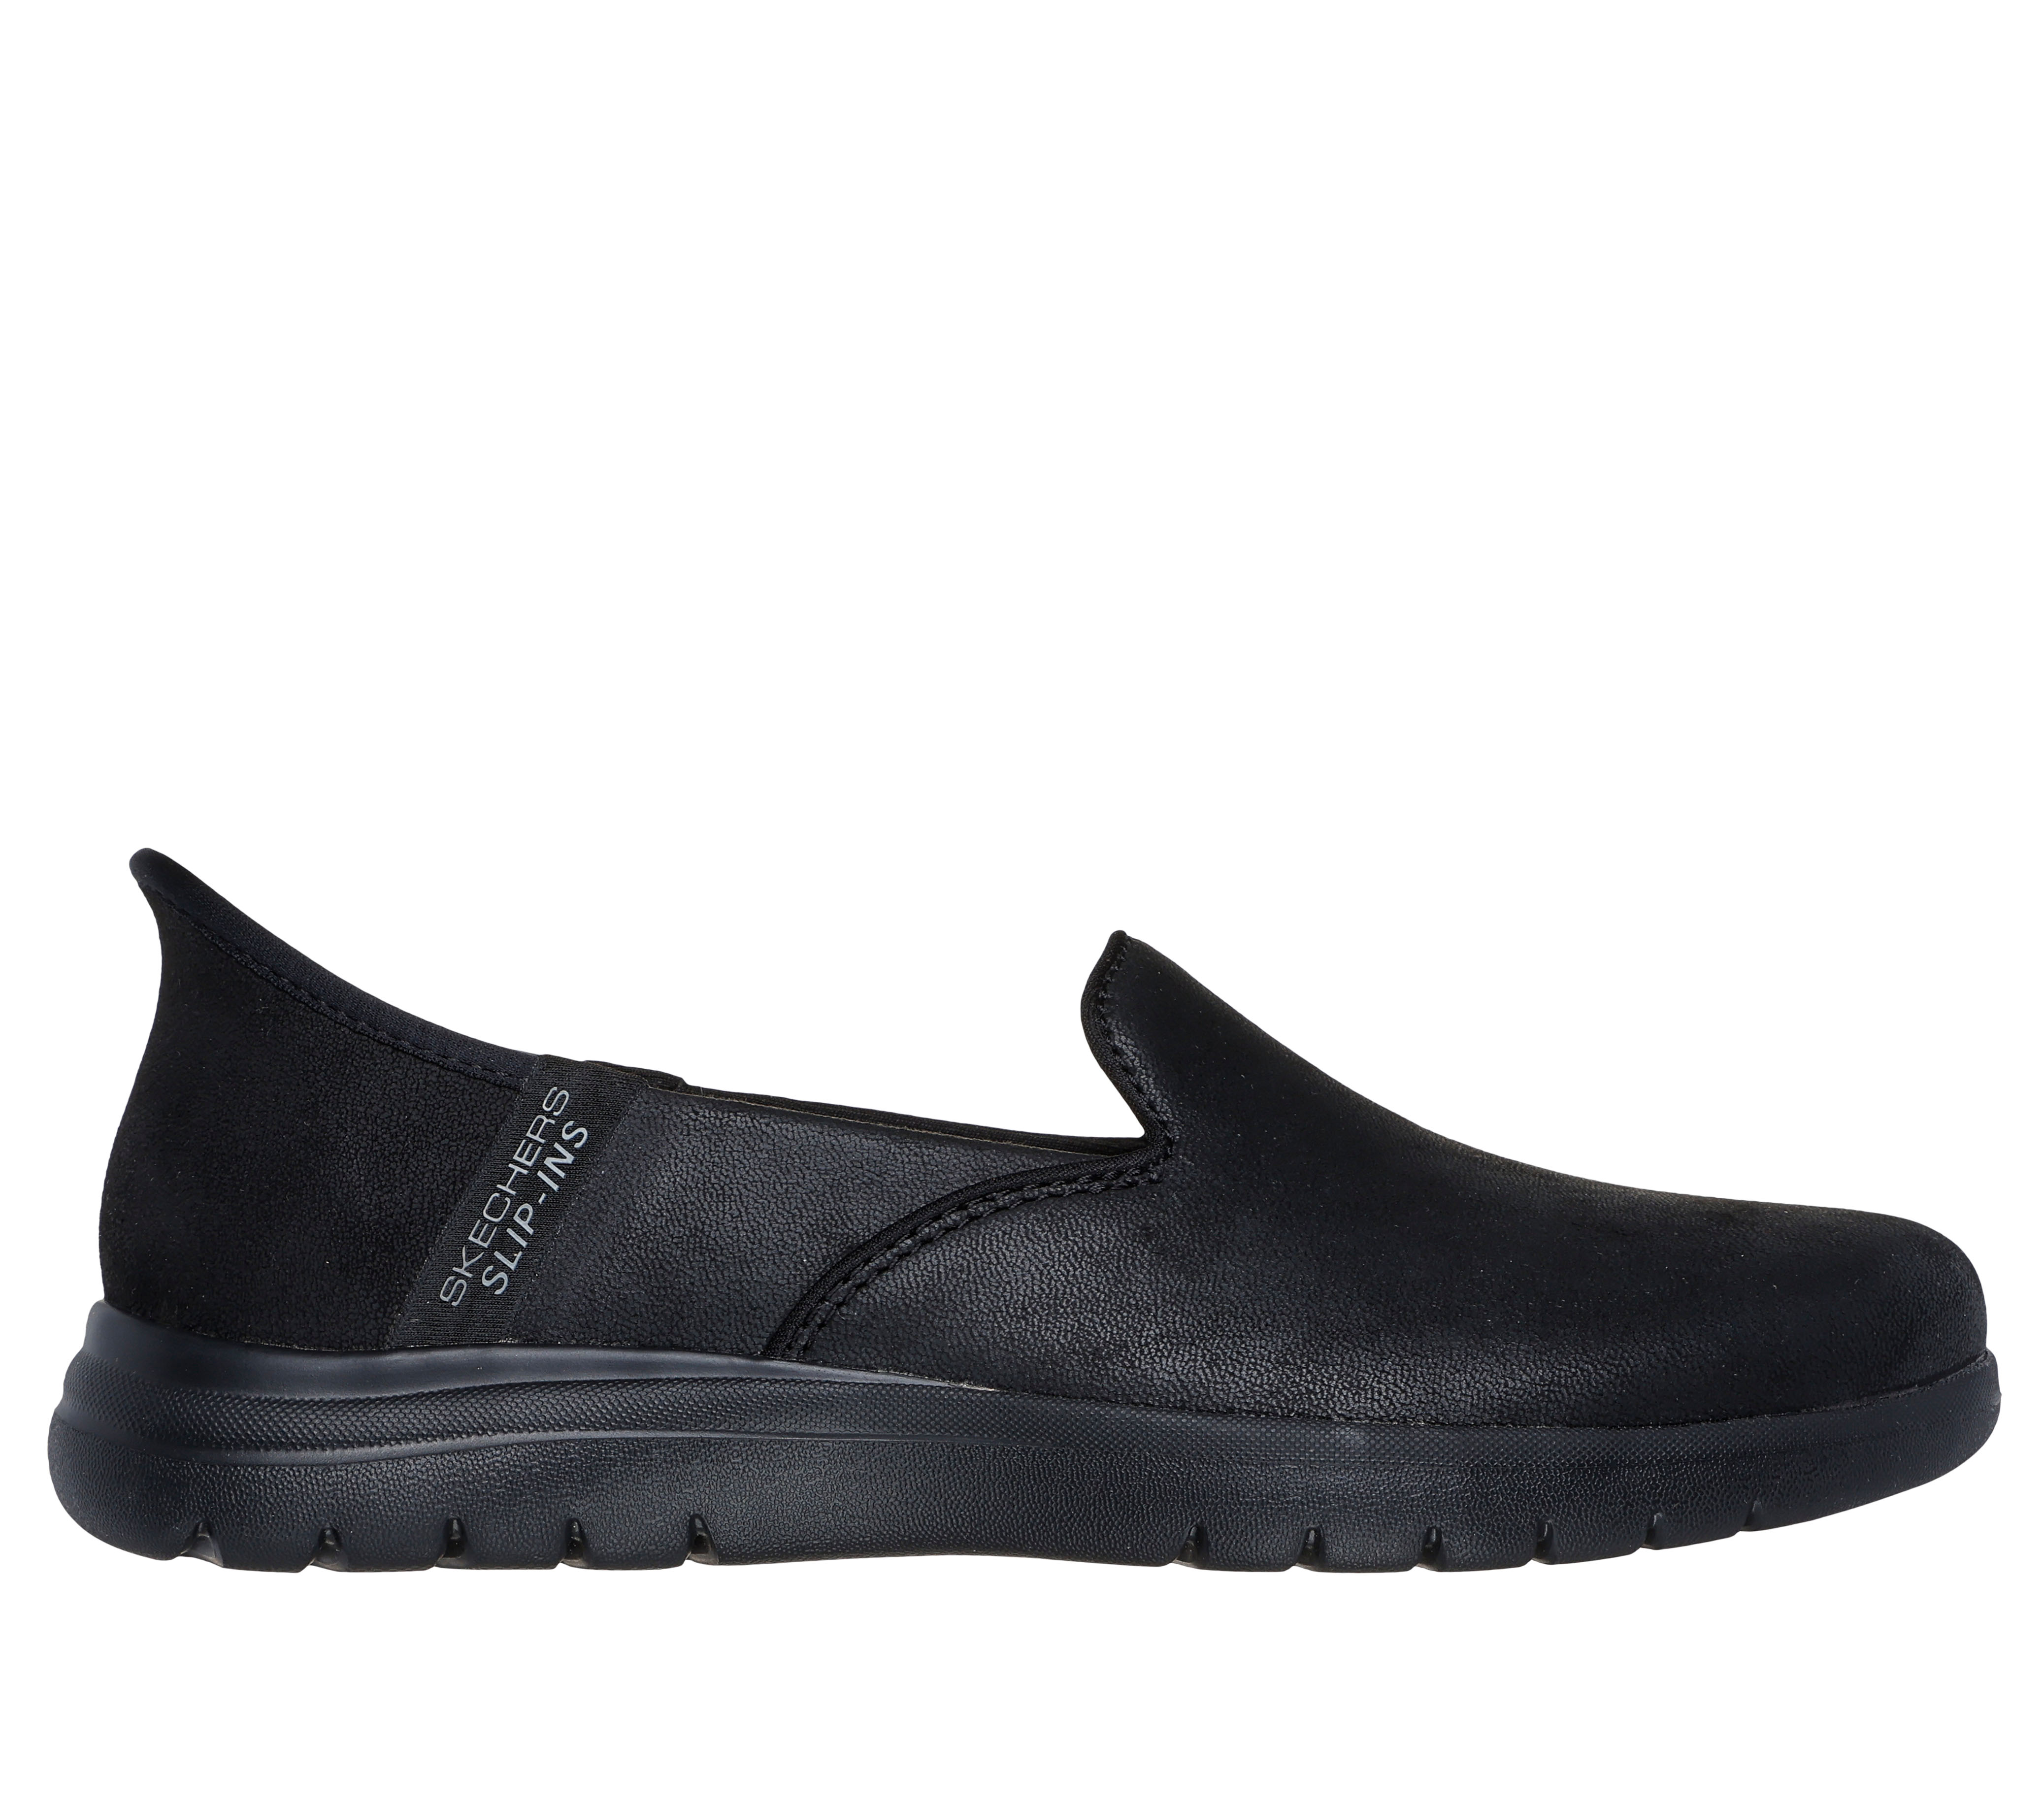 Skechers On the Go Flex Clever Slip-On Sneaker - Free Shipping